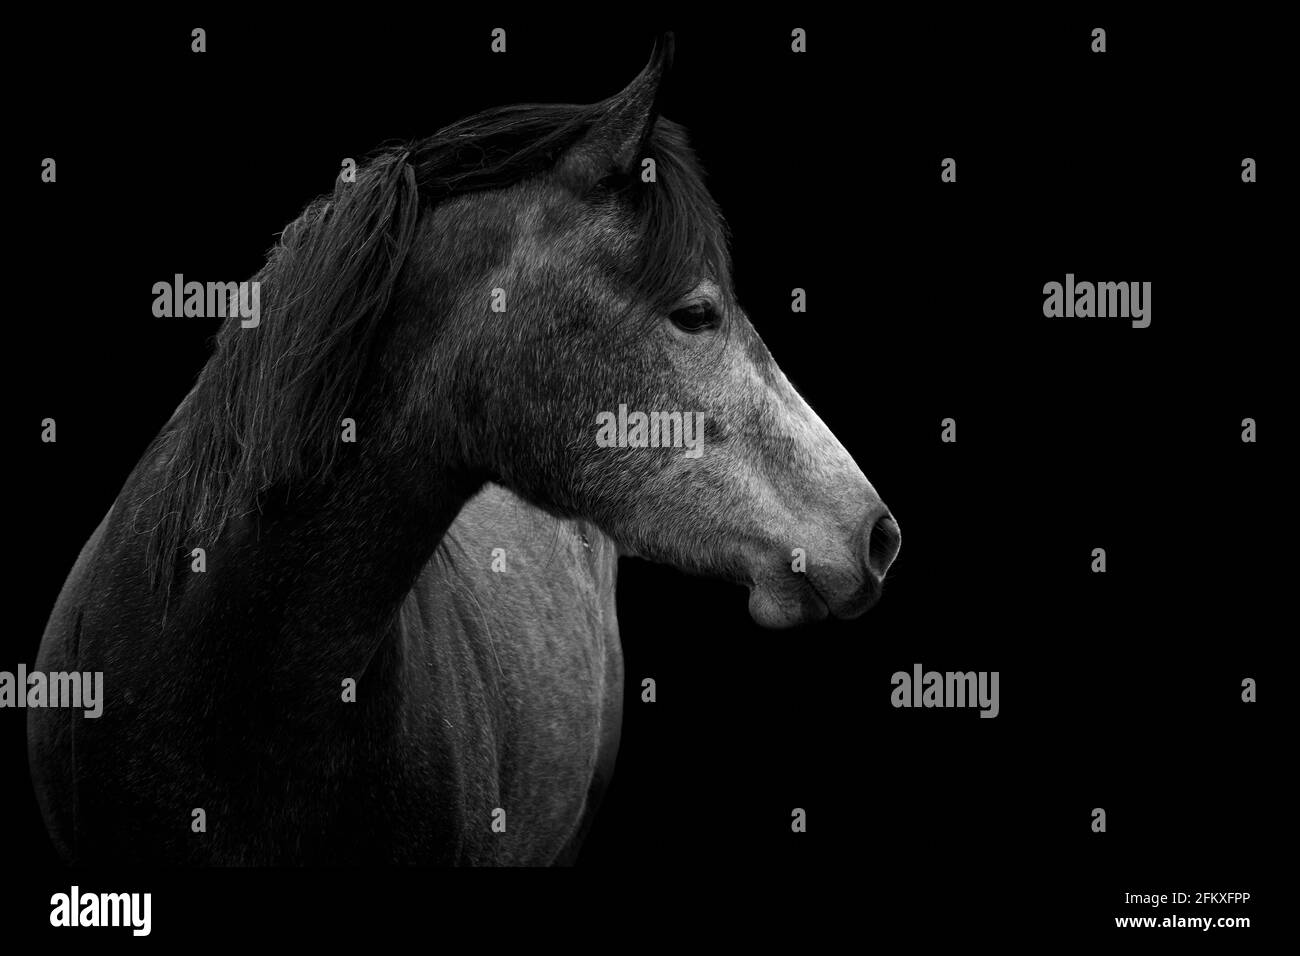 Horse Portrait Isolated On A Black Background Stock Photo Alamy